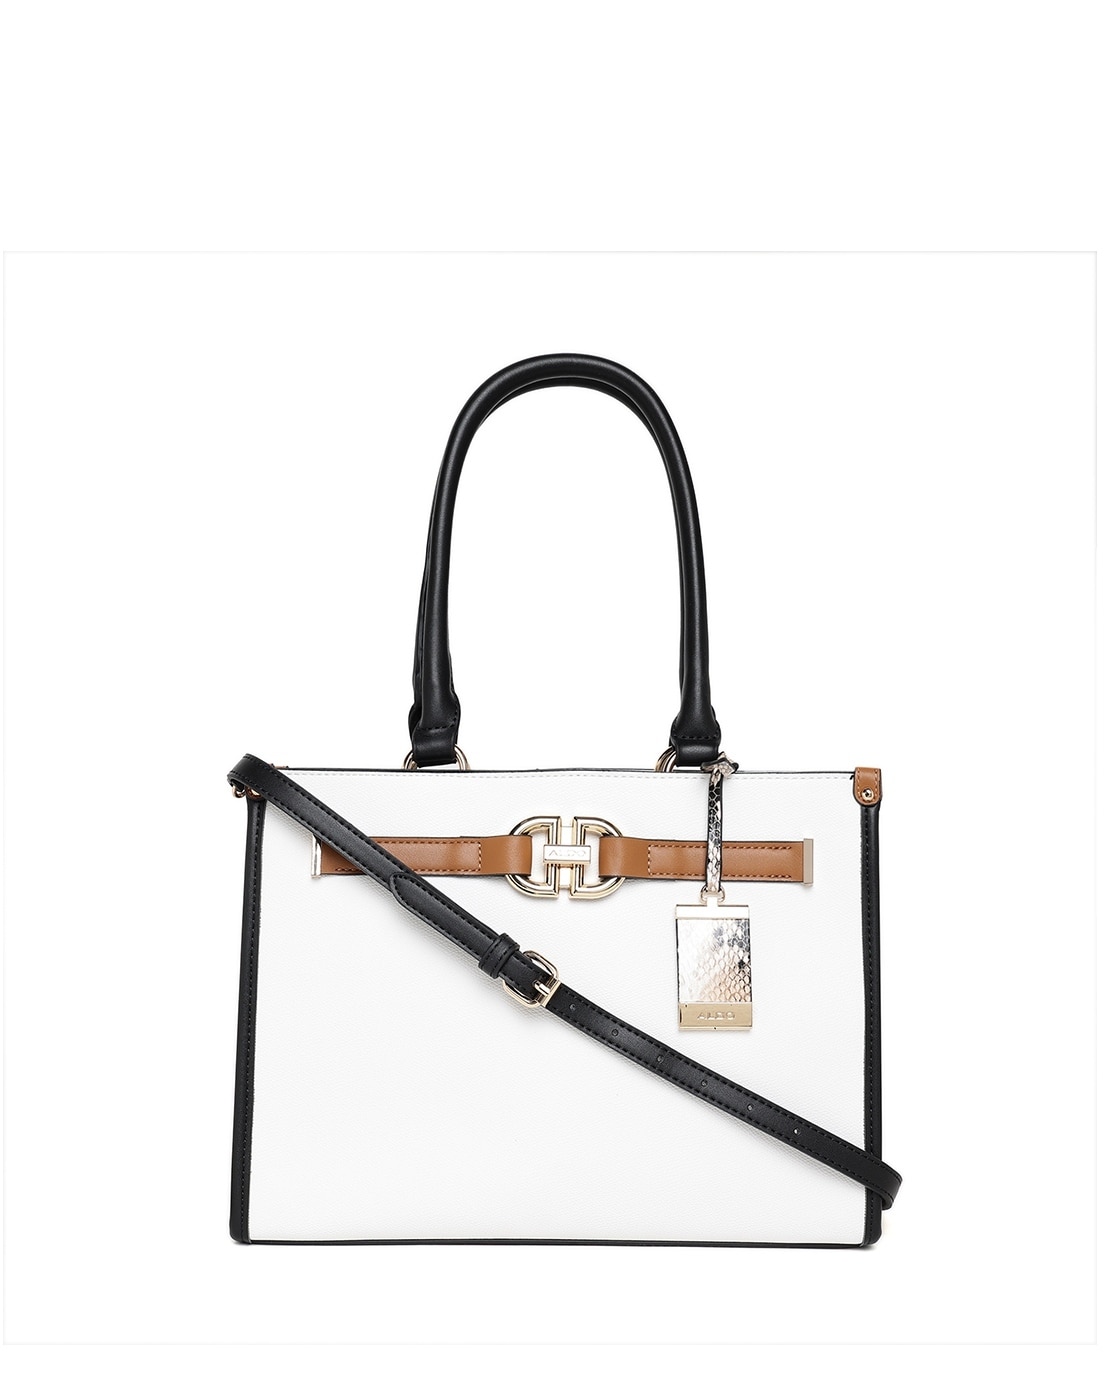 ALDO Rhiladiaax Black One Size: Handbags: Amazon.com